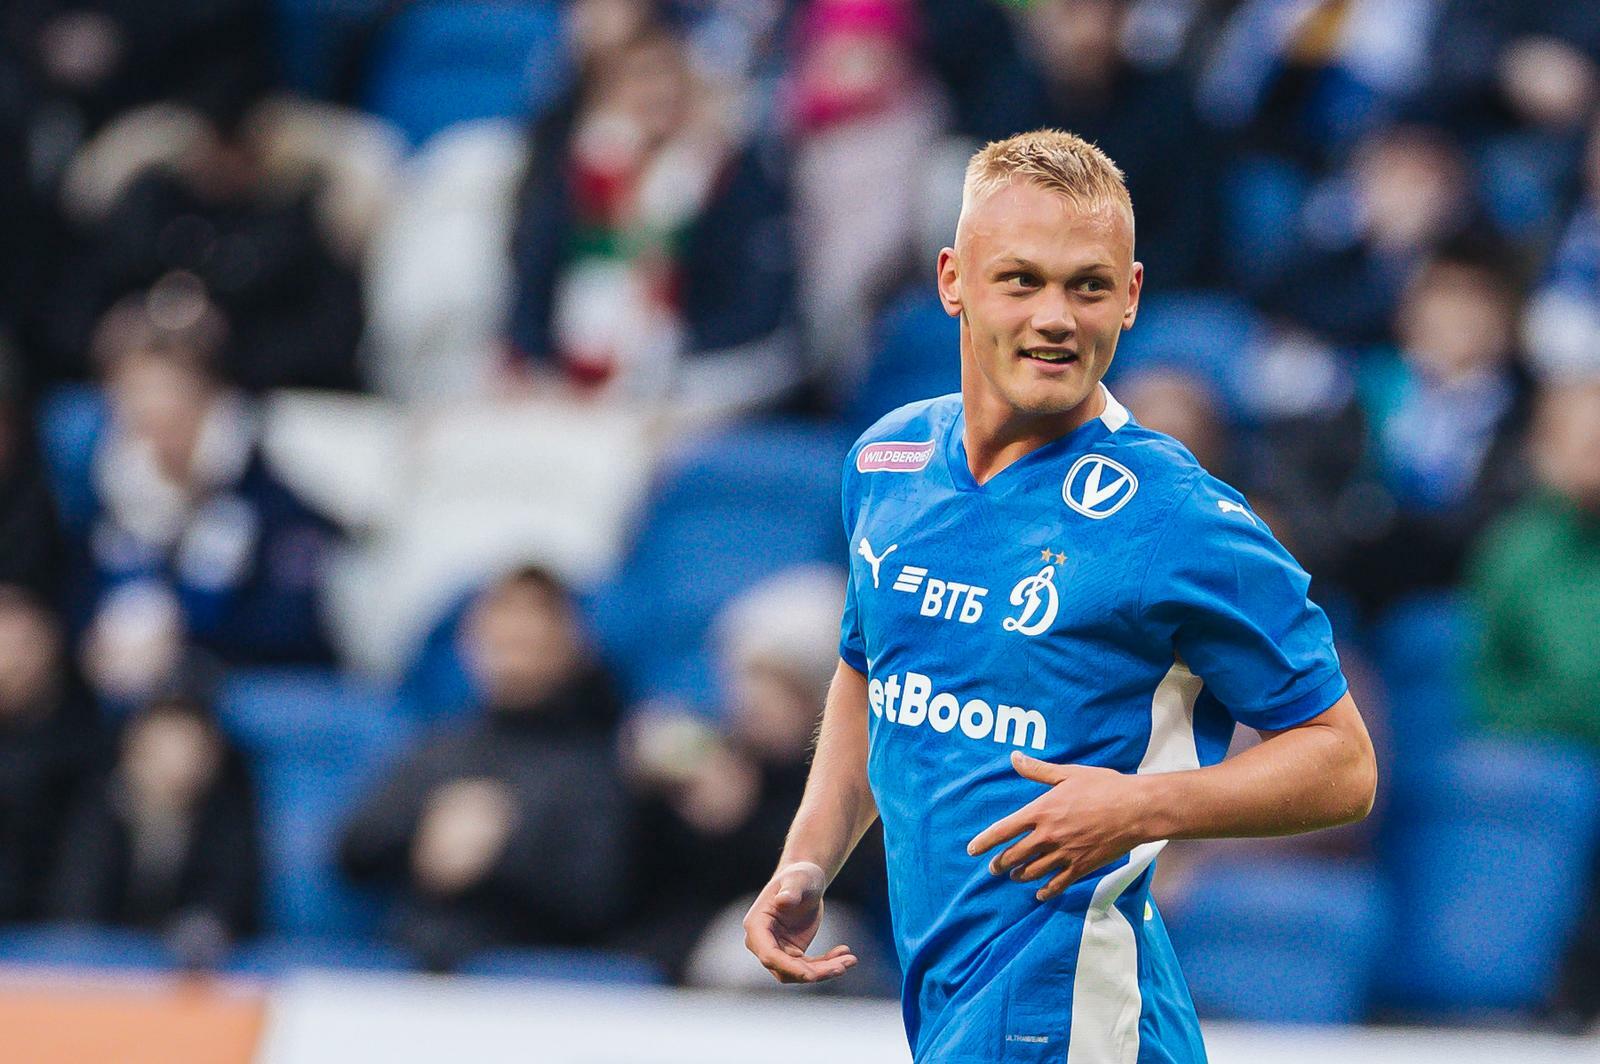 Konstantin Tyukavin: "I will be happy if I score 15 goals by the end of the season"